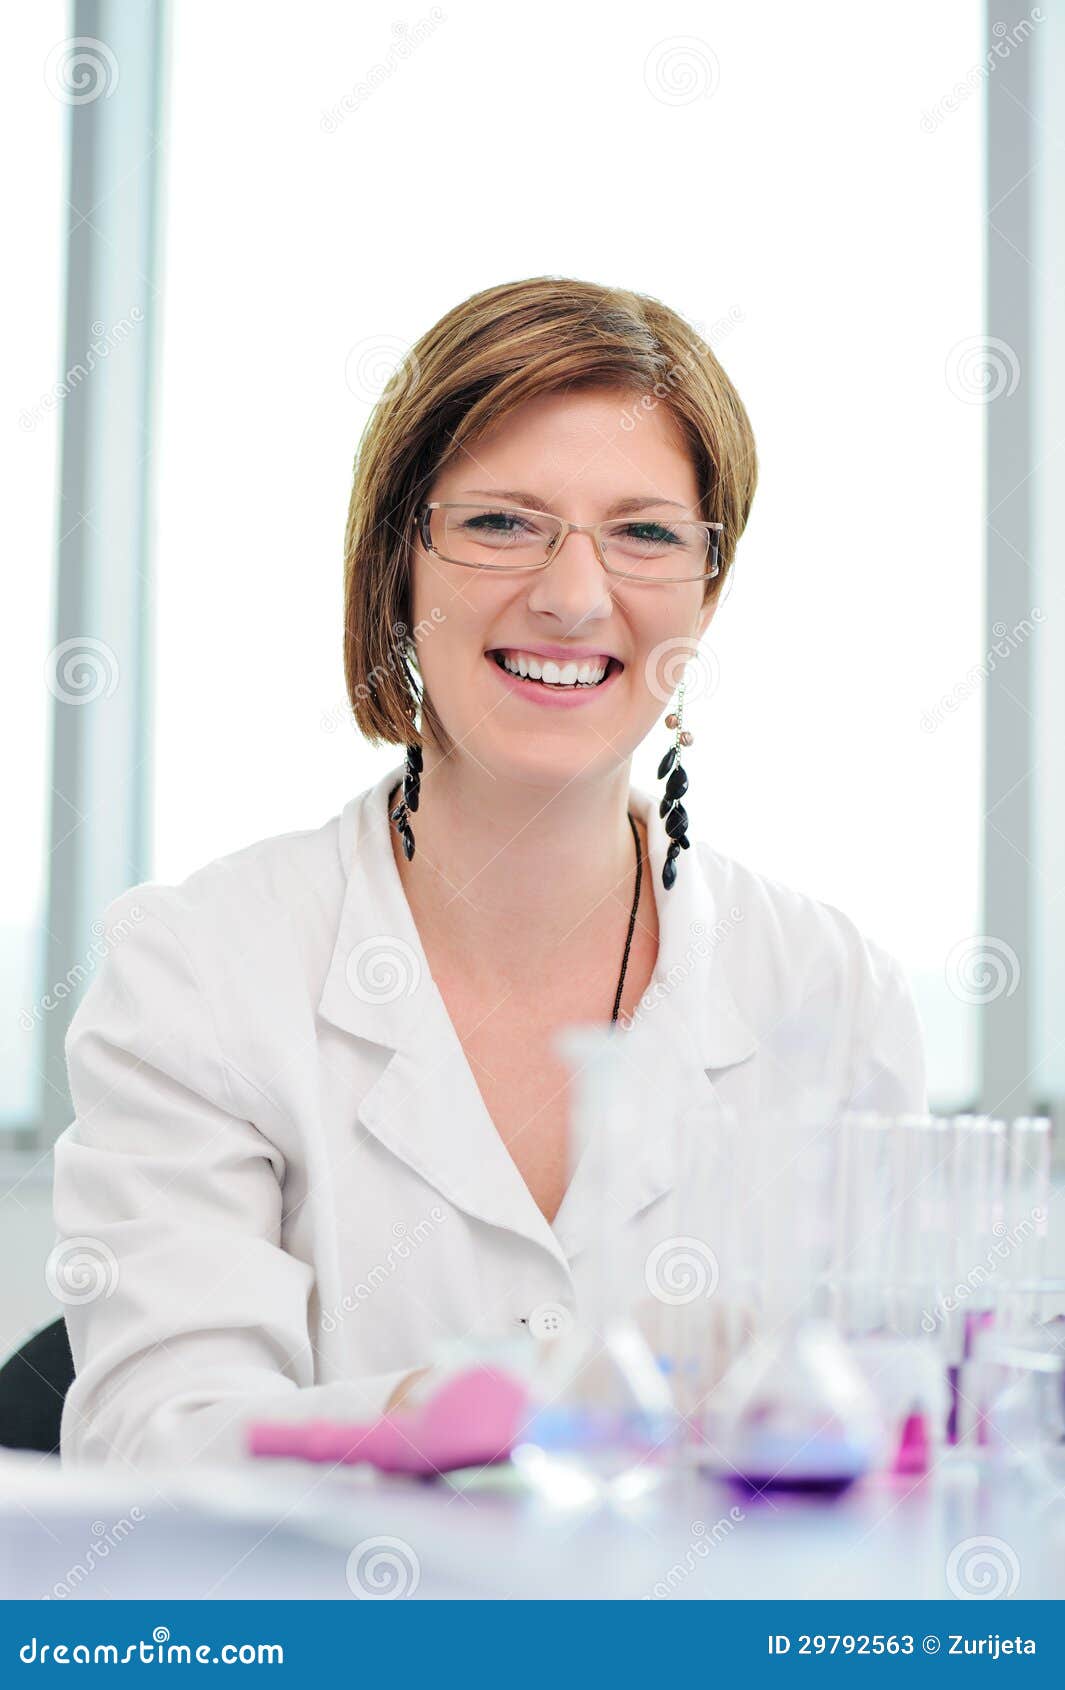 Beautiful Woman in Laboratory Stock Image - Image of liquid, people ...